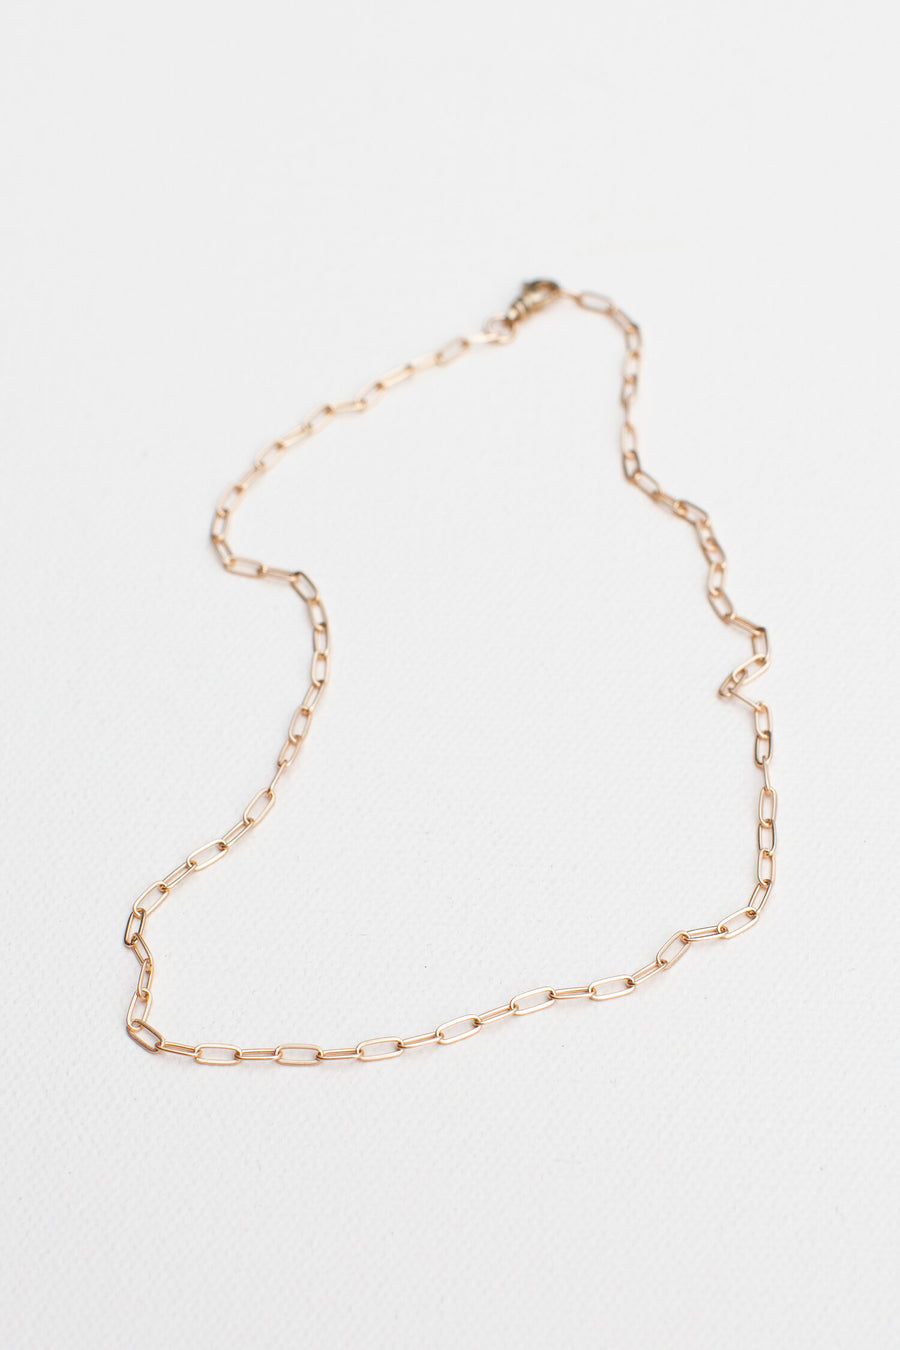 Paper Clip Necklace by Samantha Slater